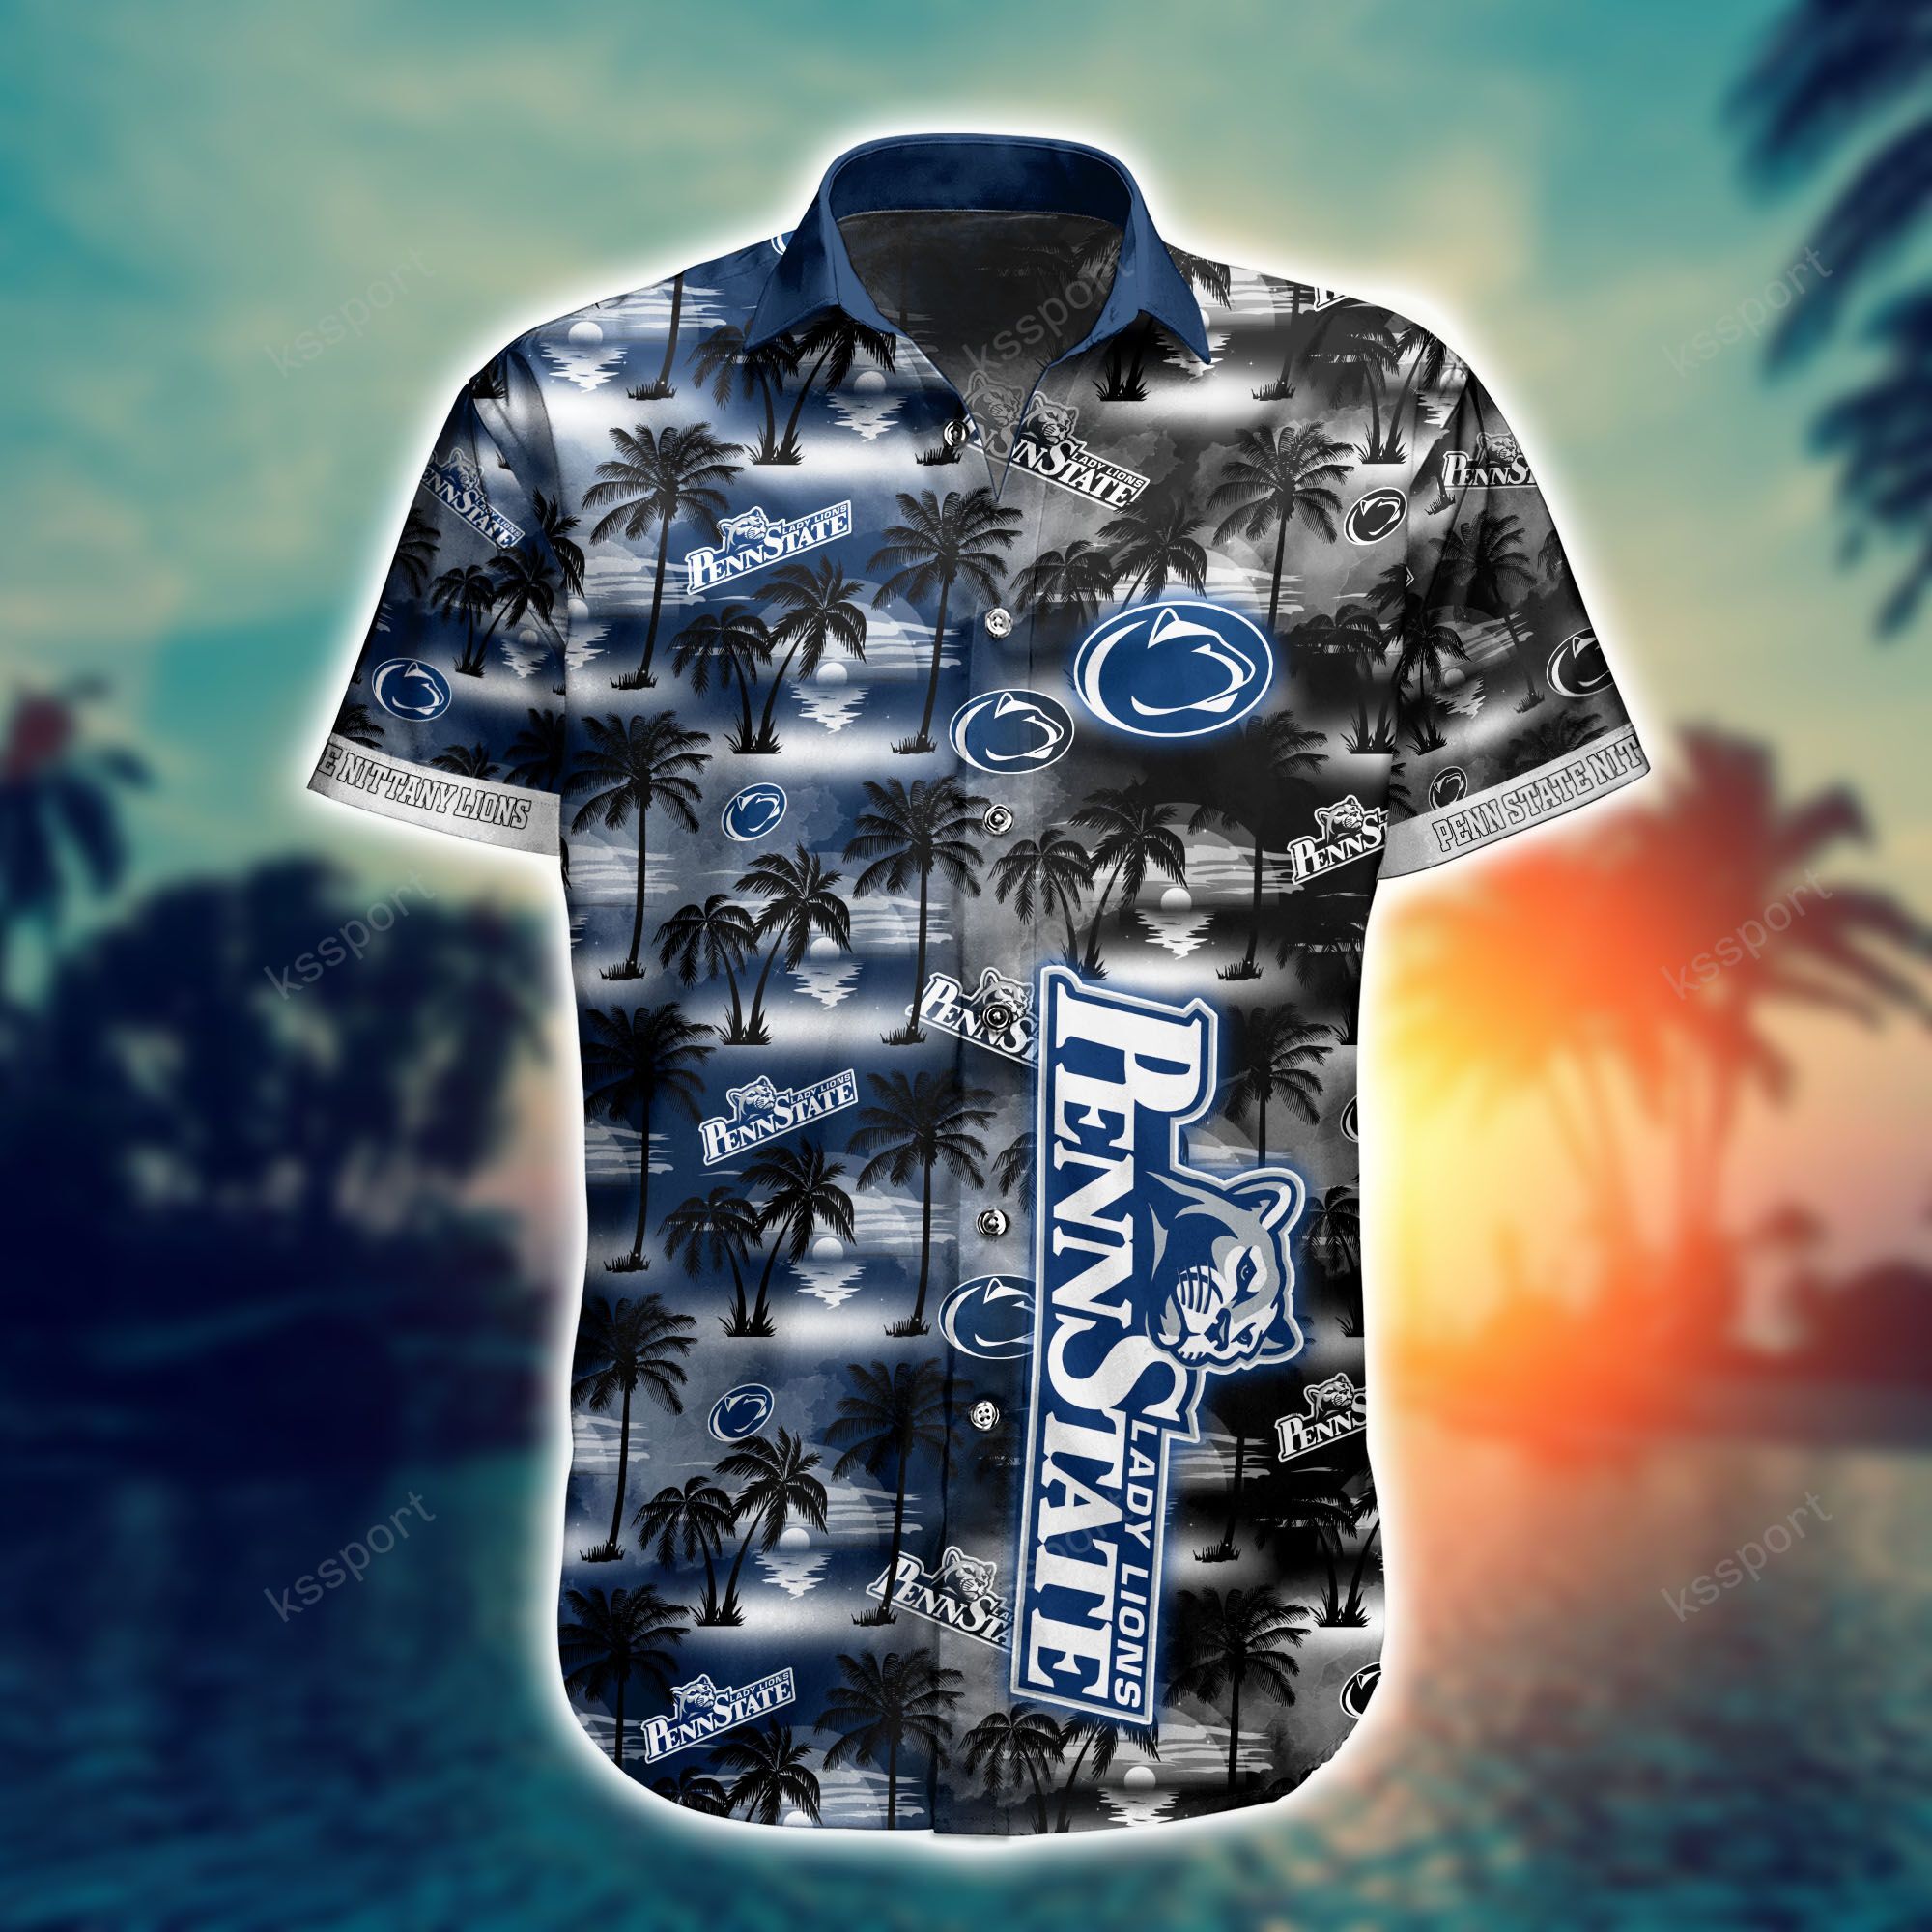 Hawaiian shirt and shorts is a great way to look stylish at a beach party 19